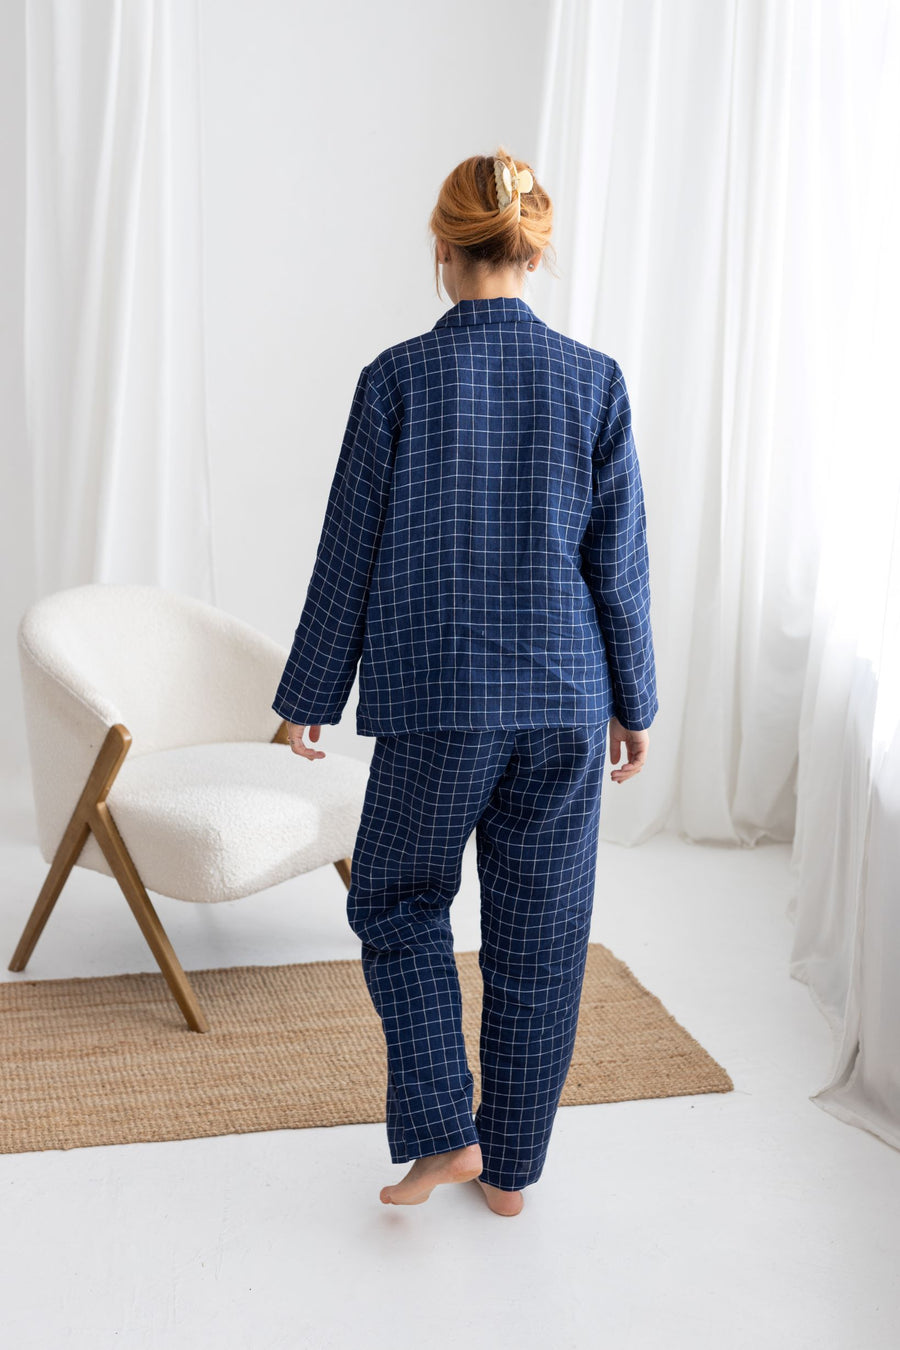 Navy blue windowpane linen pajama set